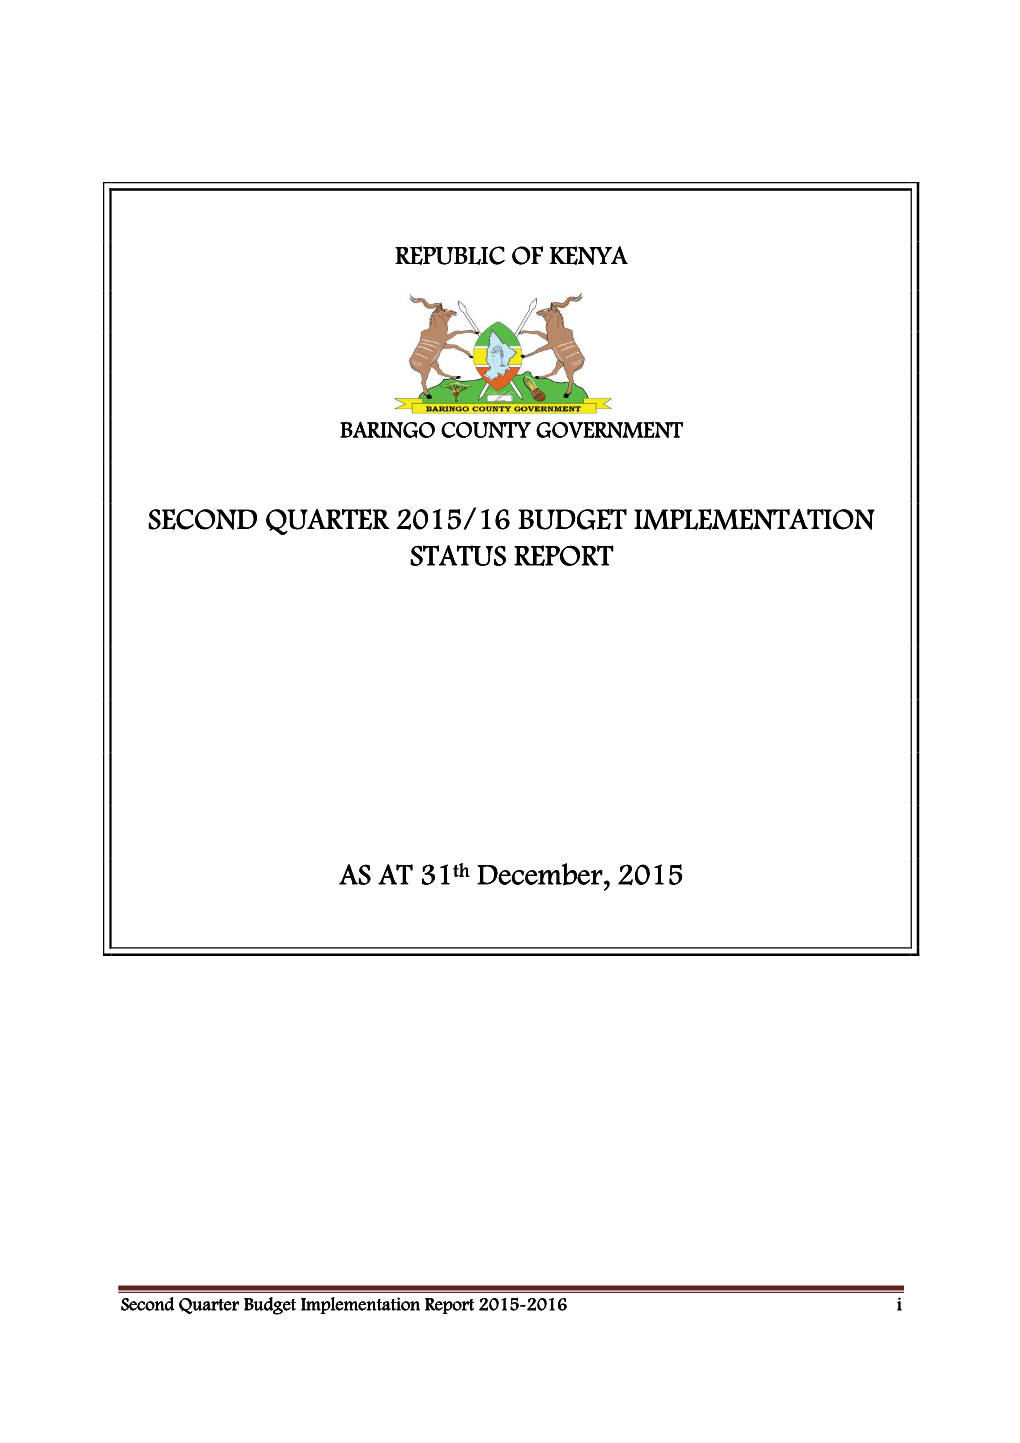 Second Quarter 2015/16 Budget Implementation Status Report